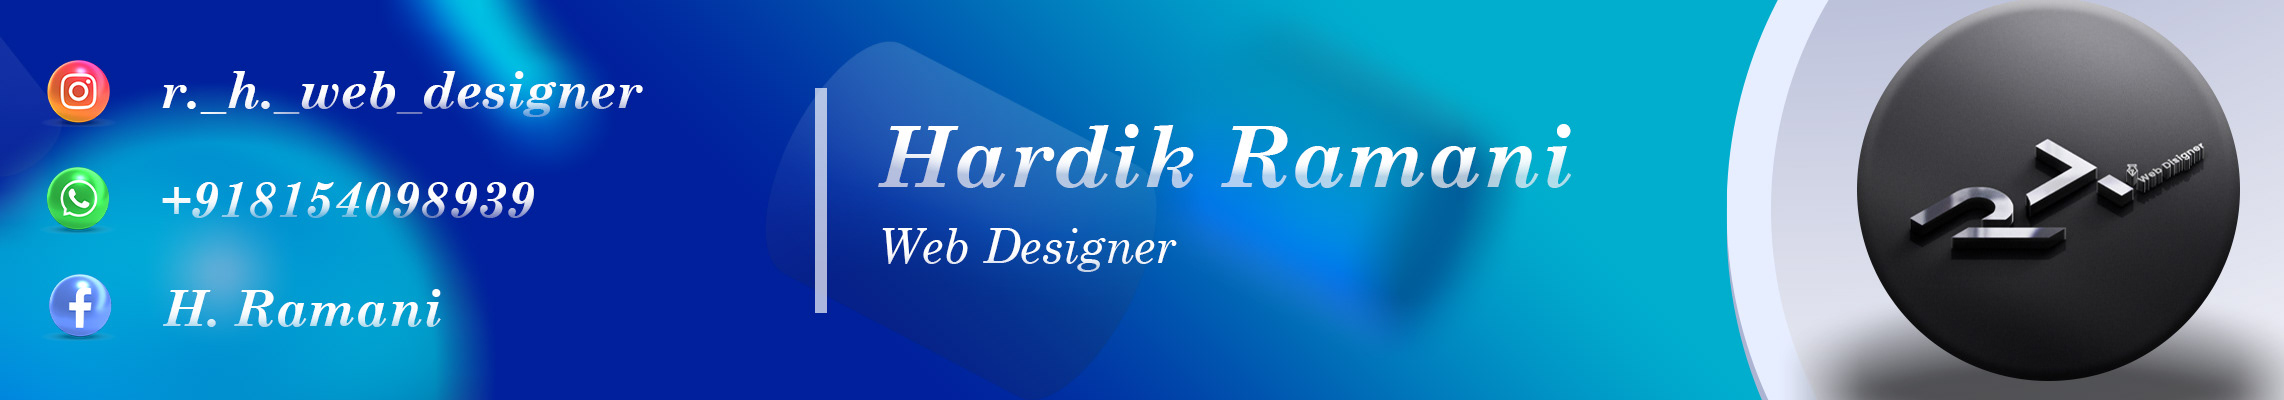 hardik ramani's profile banner